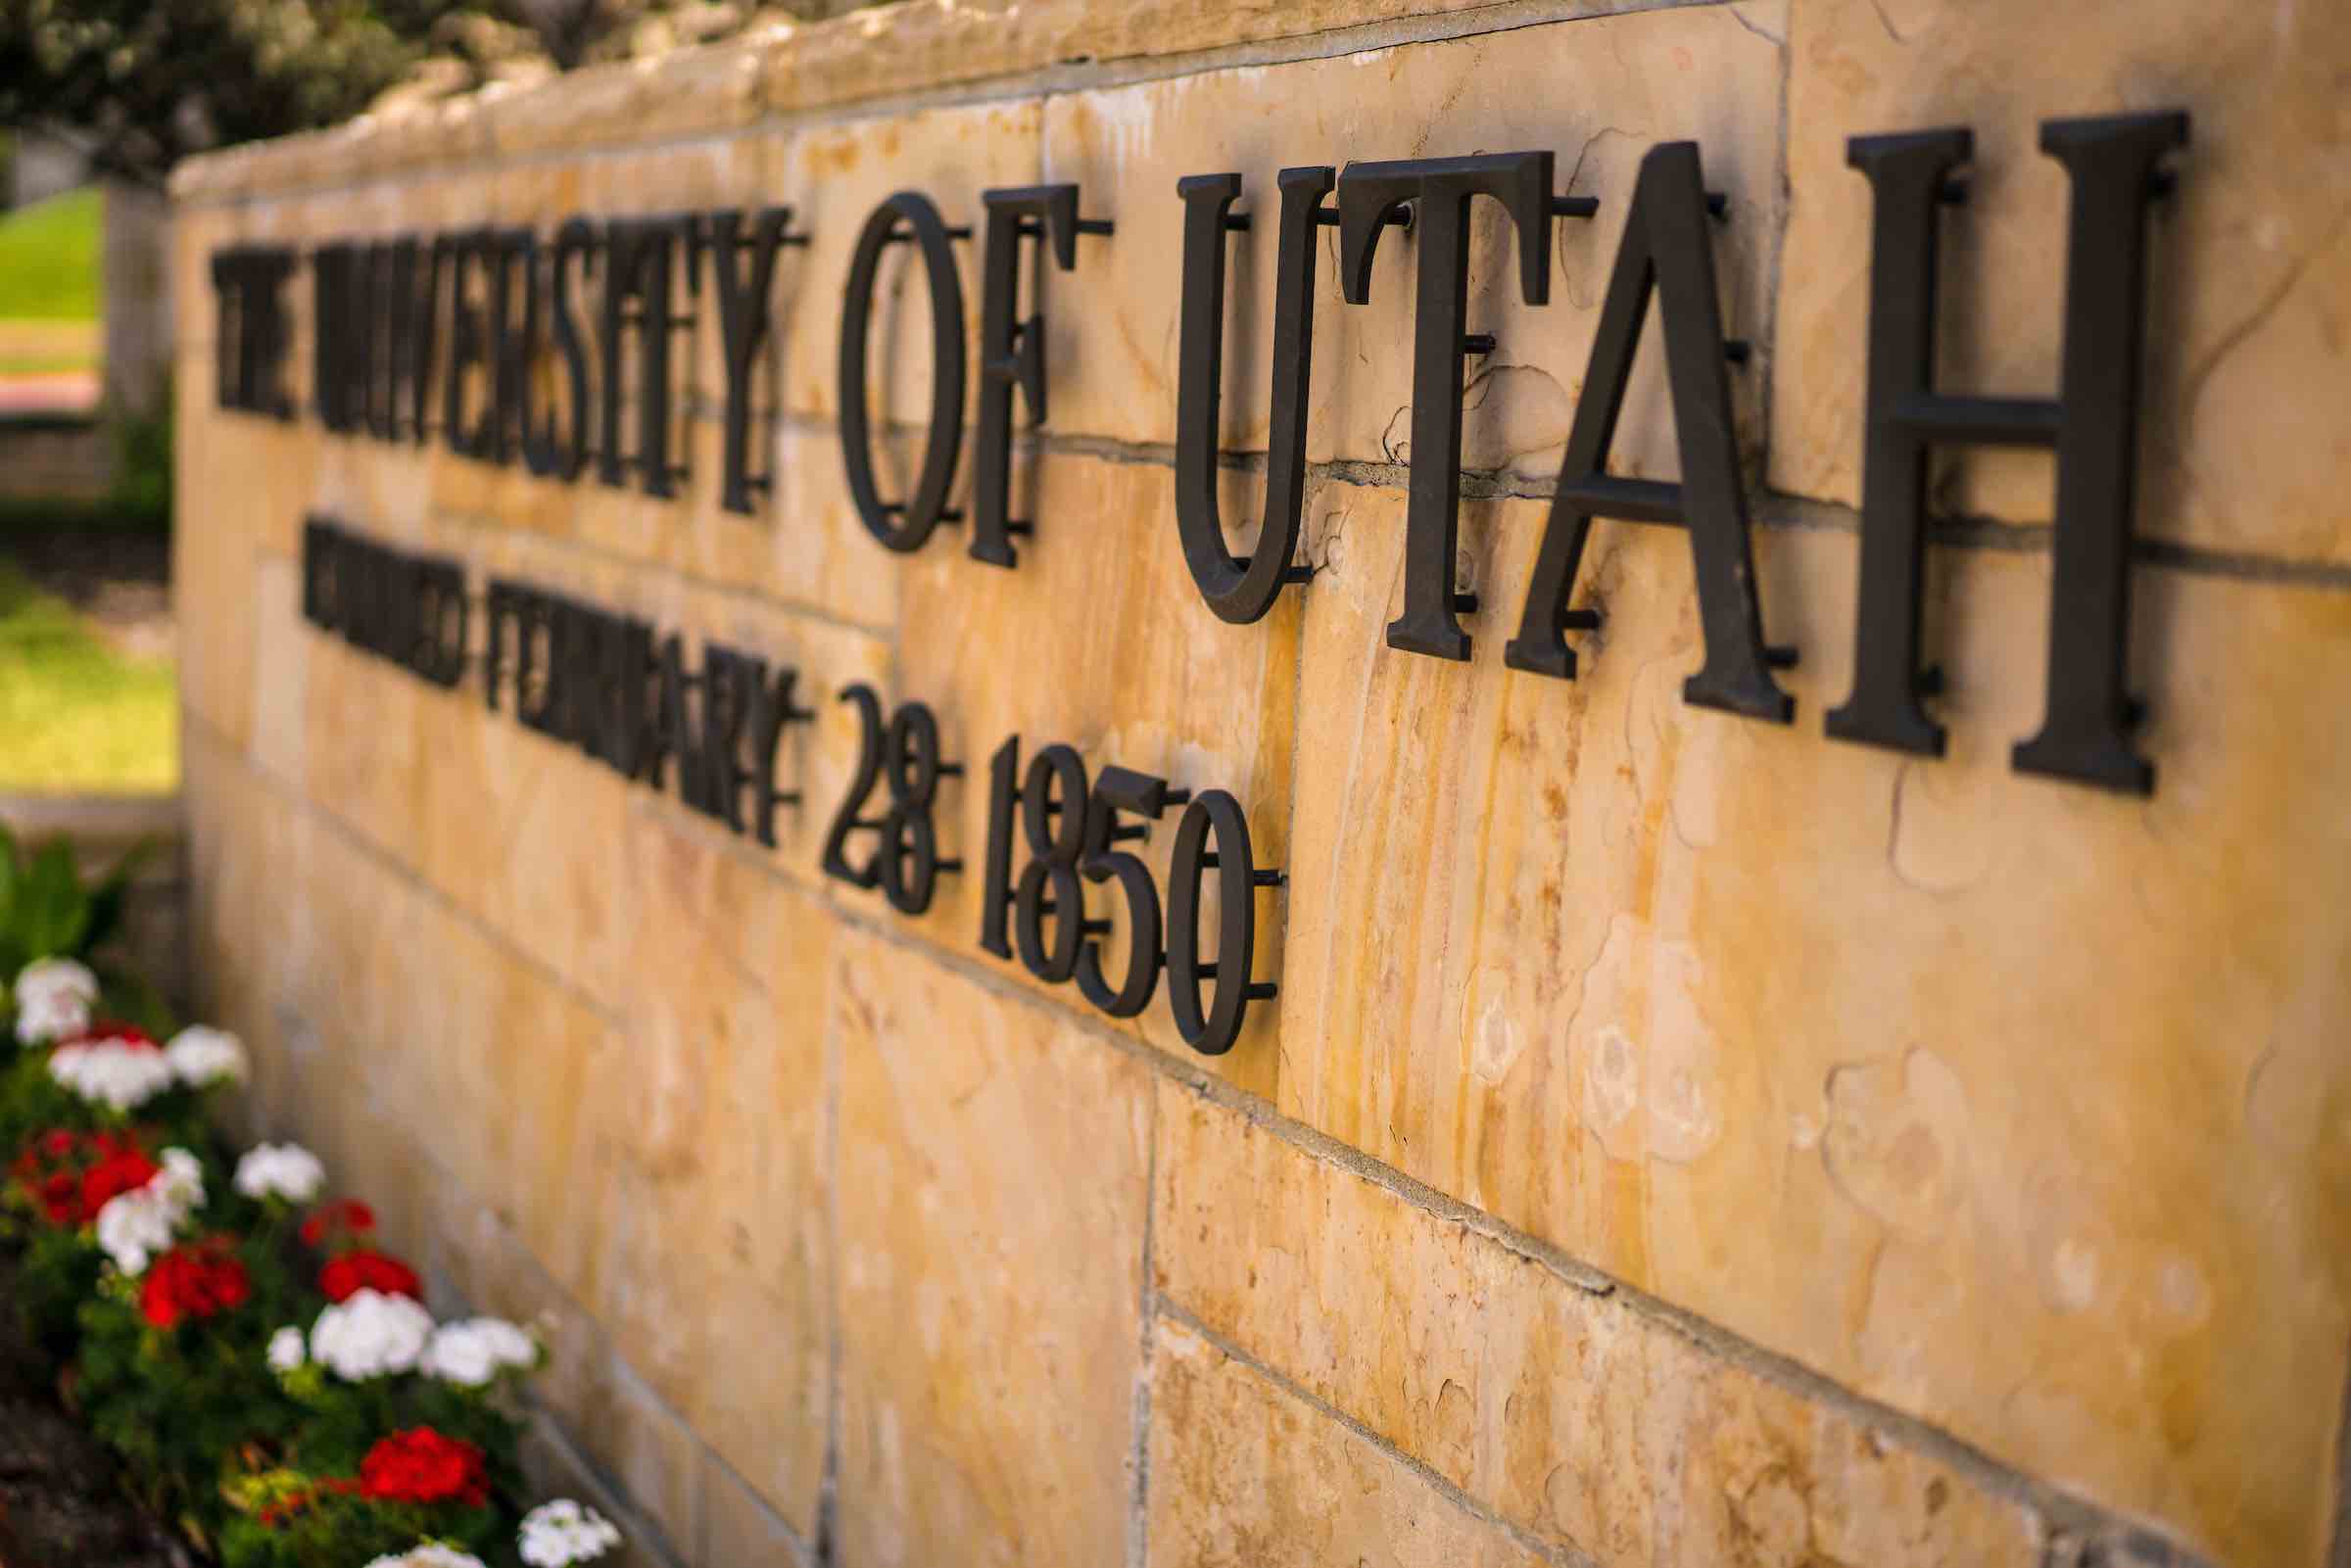 Univeristy of Utah